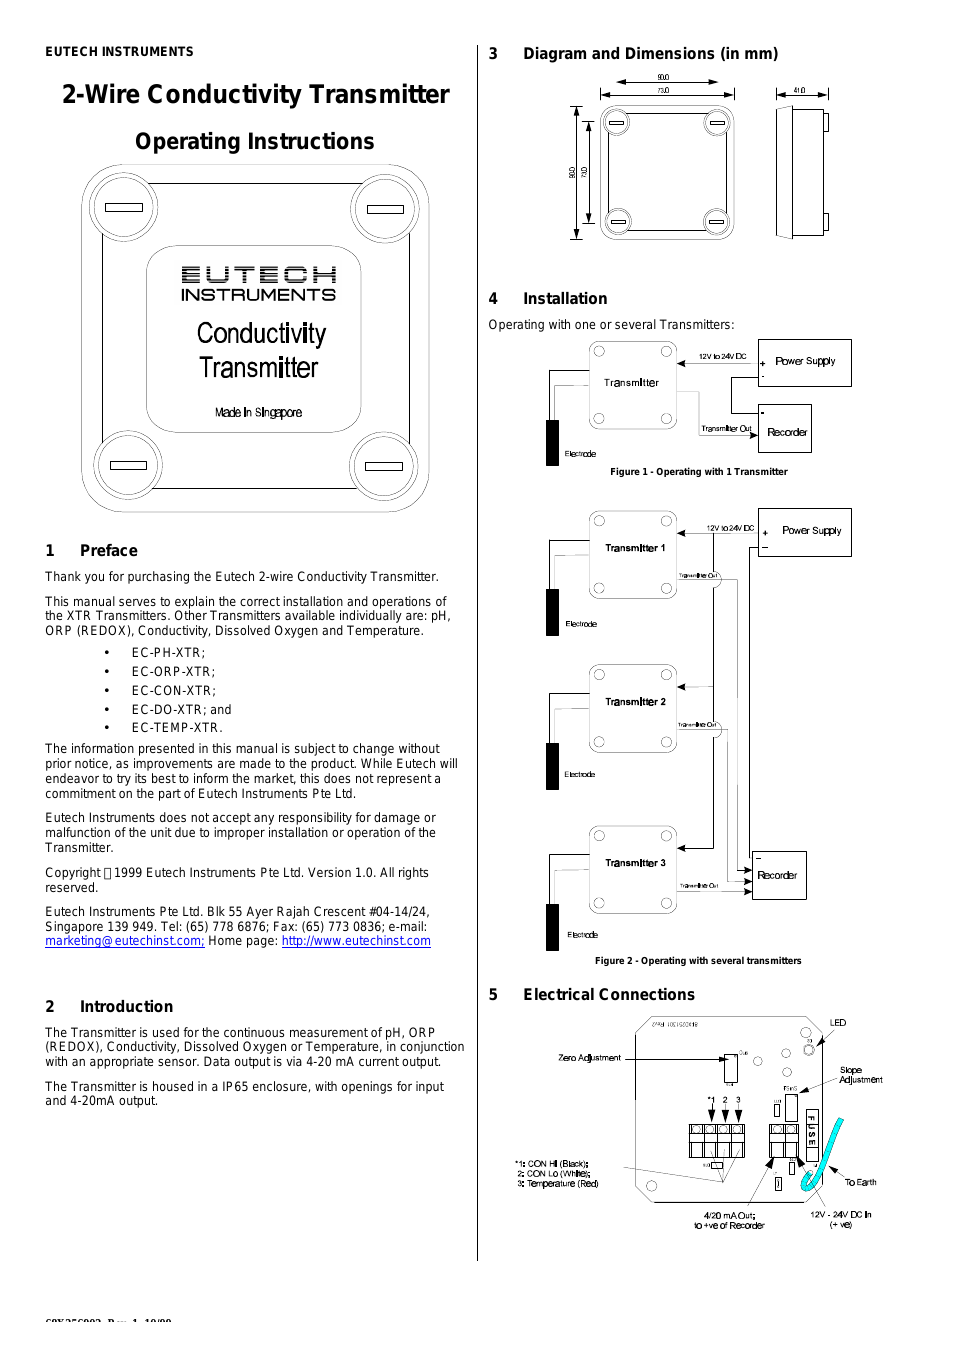 2-Wire Conductivity Transmitter